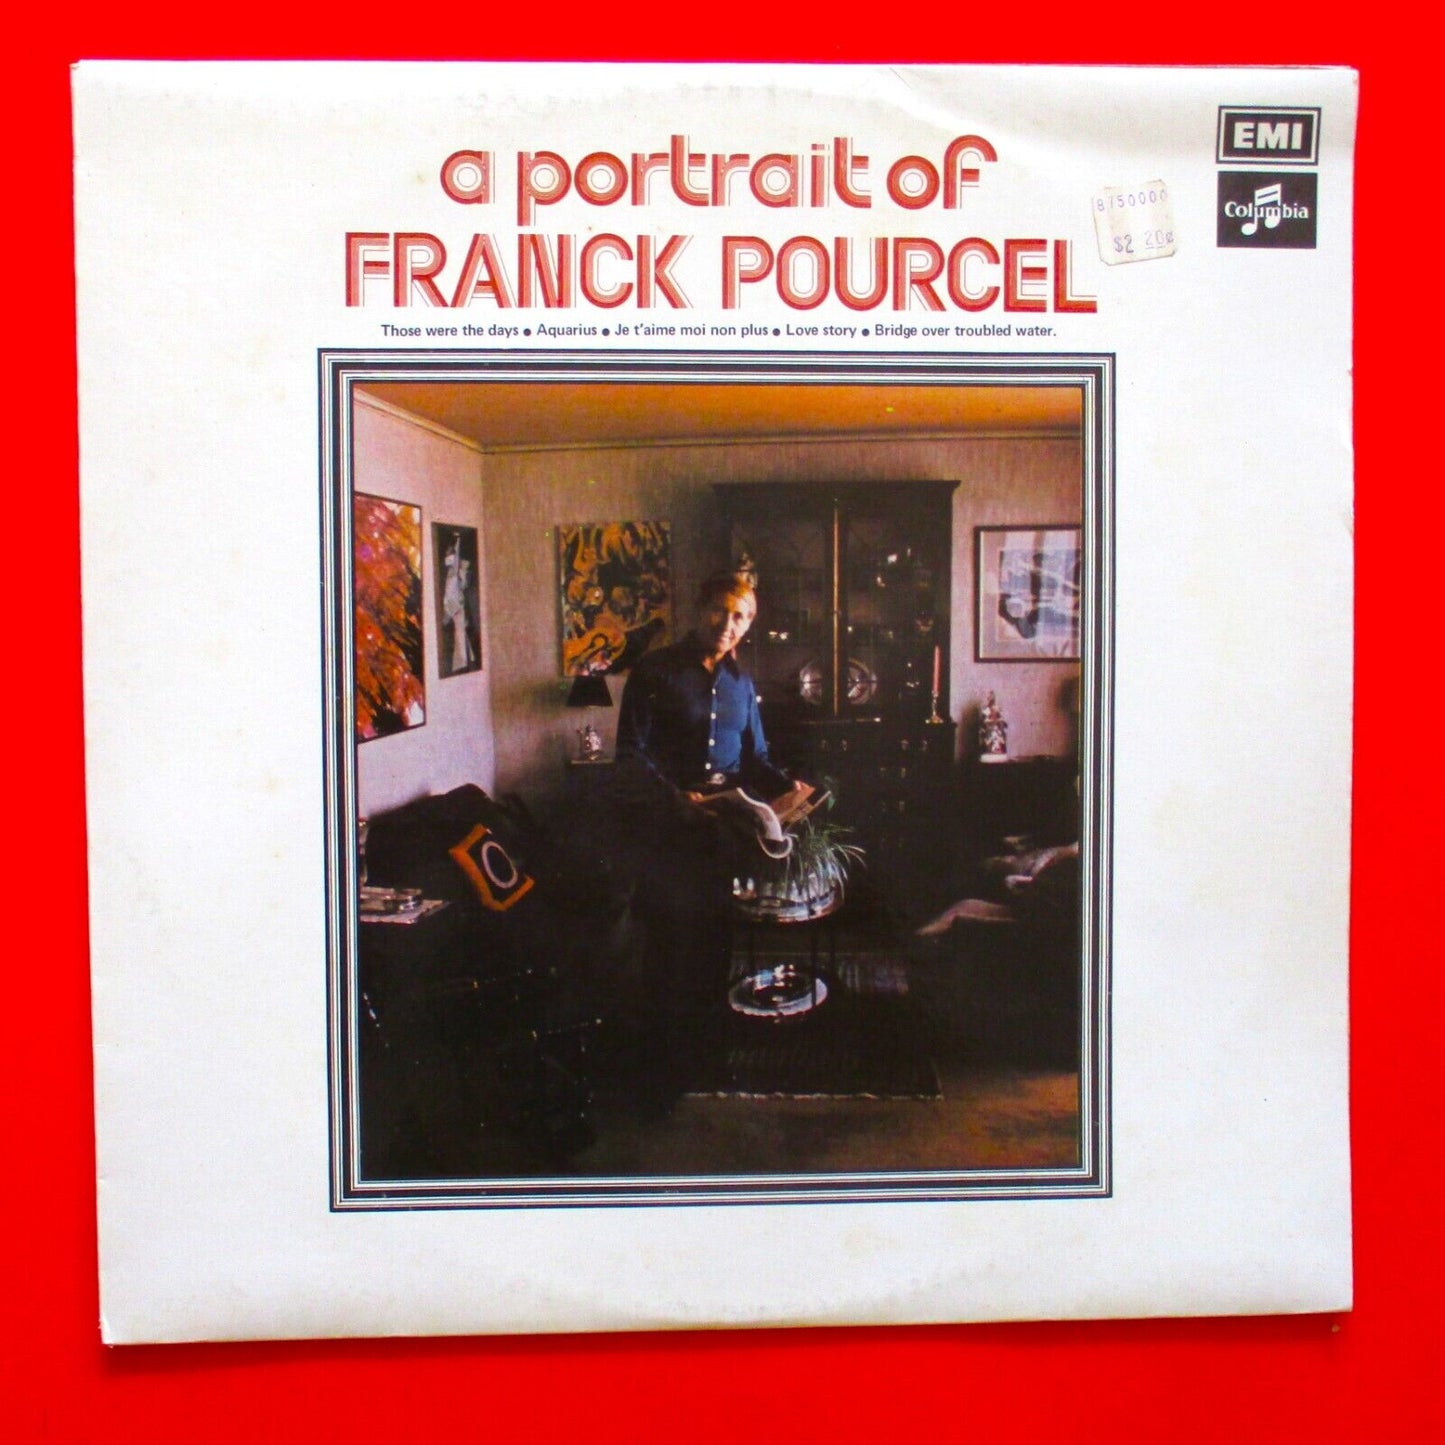 Franck Pourcel A Portrait Of Franck Pourcel Vinyl Album LP Jazz Easy Listening